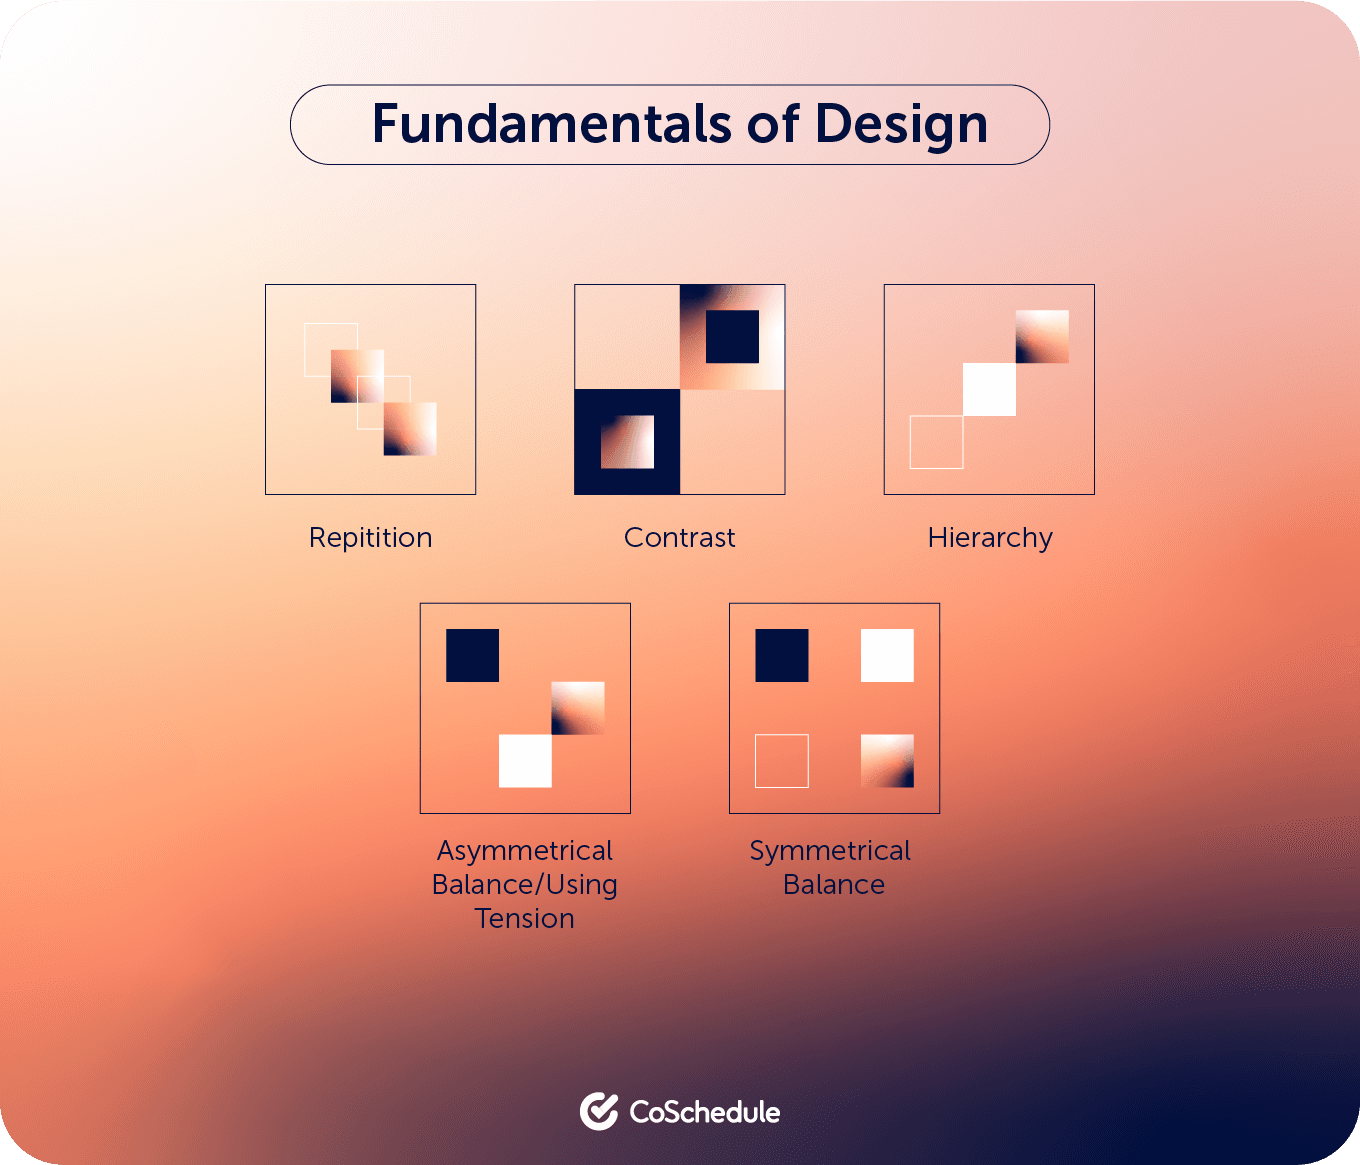 Fundamentals of design by CoSchedule